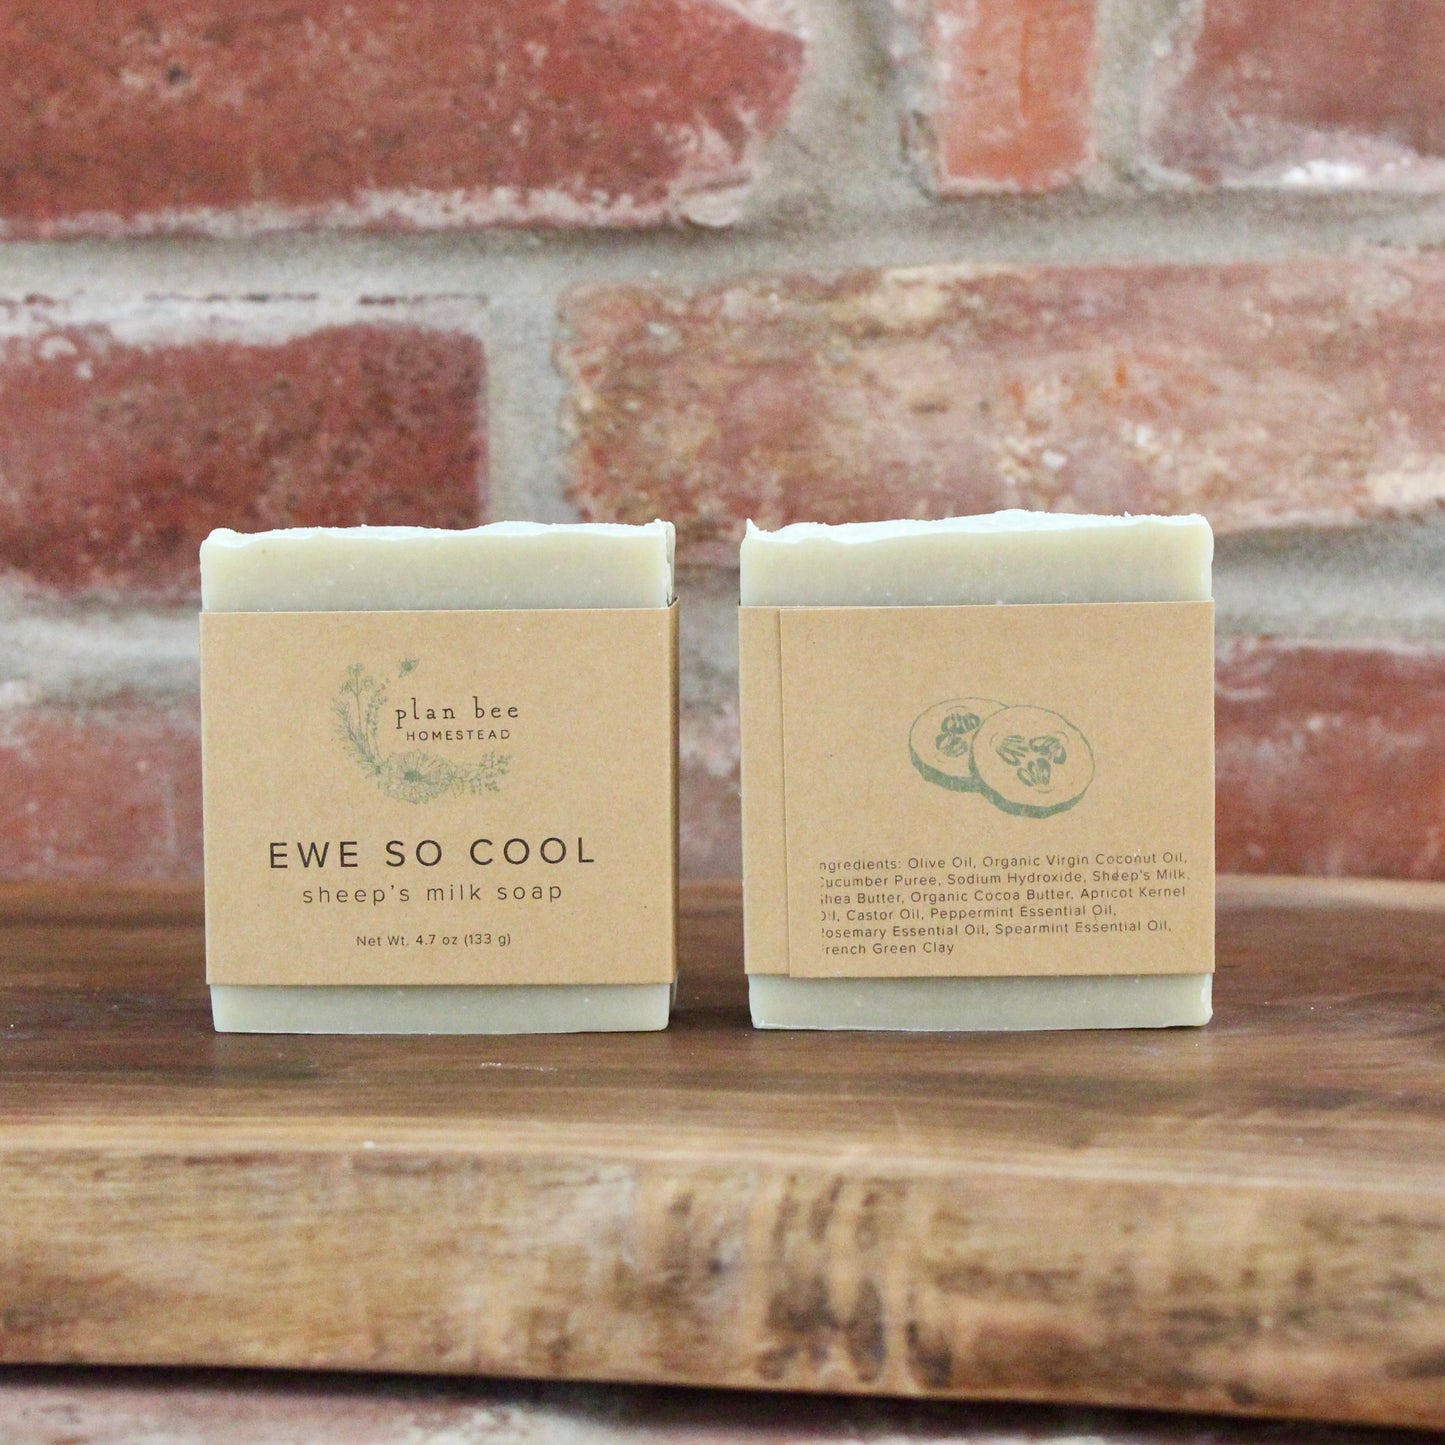 Ewe So Cool - Cucumber Mint Sheep's Milk Soap